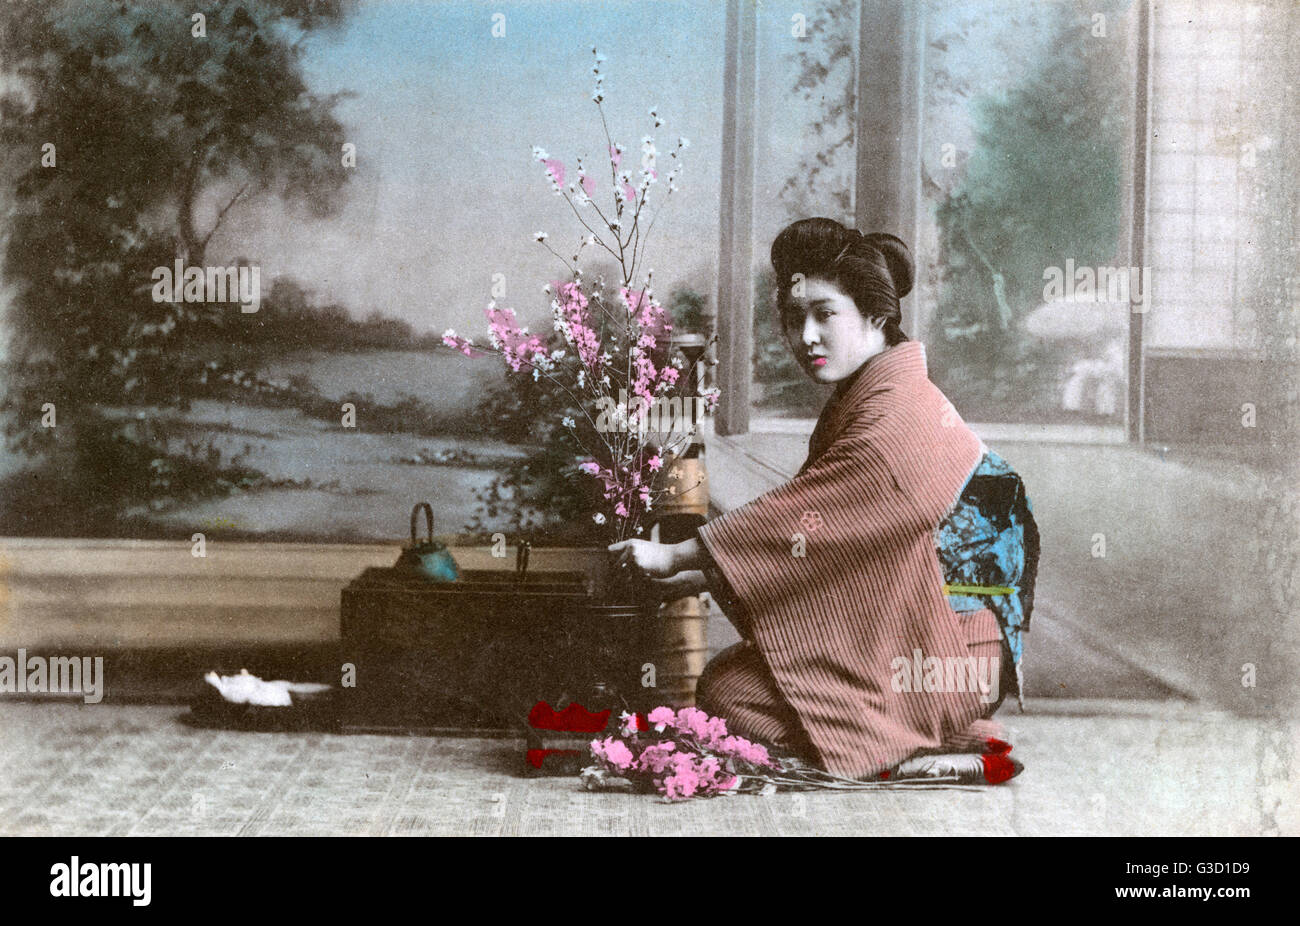 Japanese Geisha girl arranging flowers Stock Photo